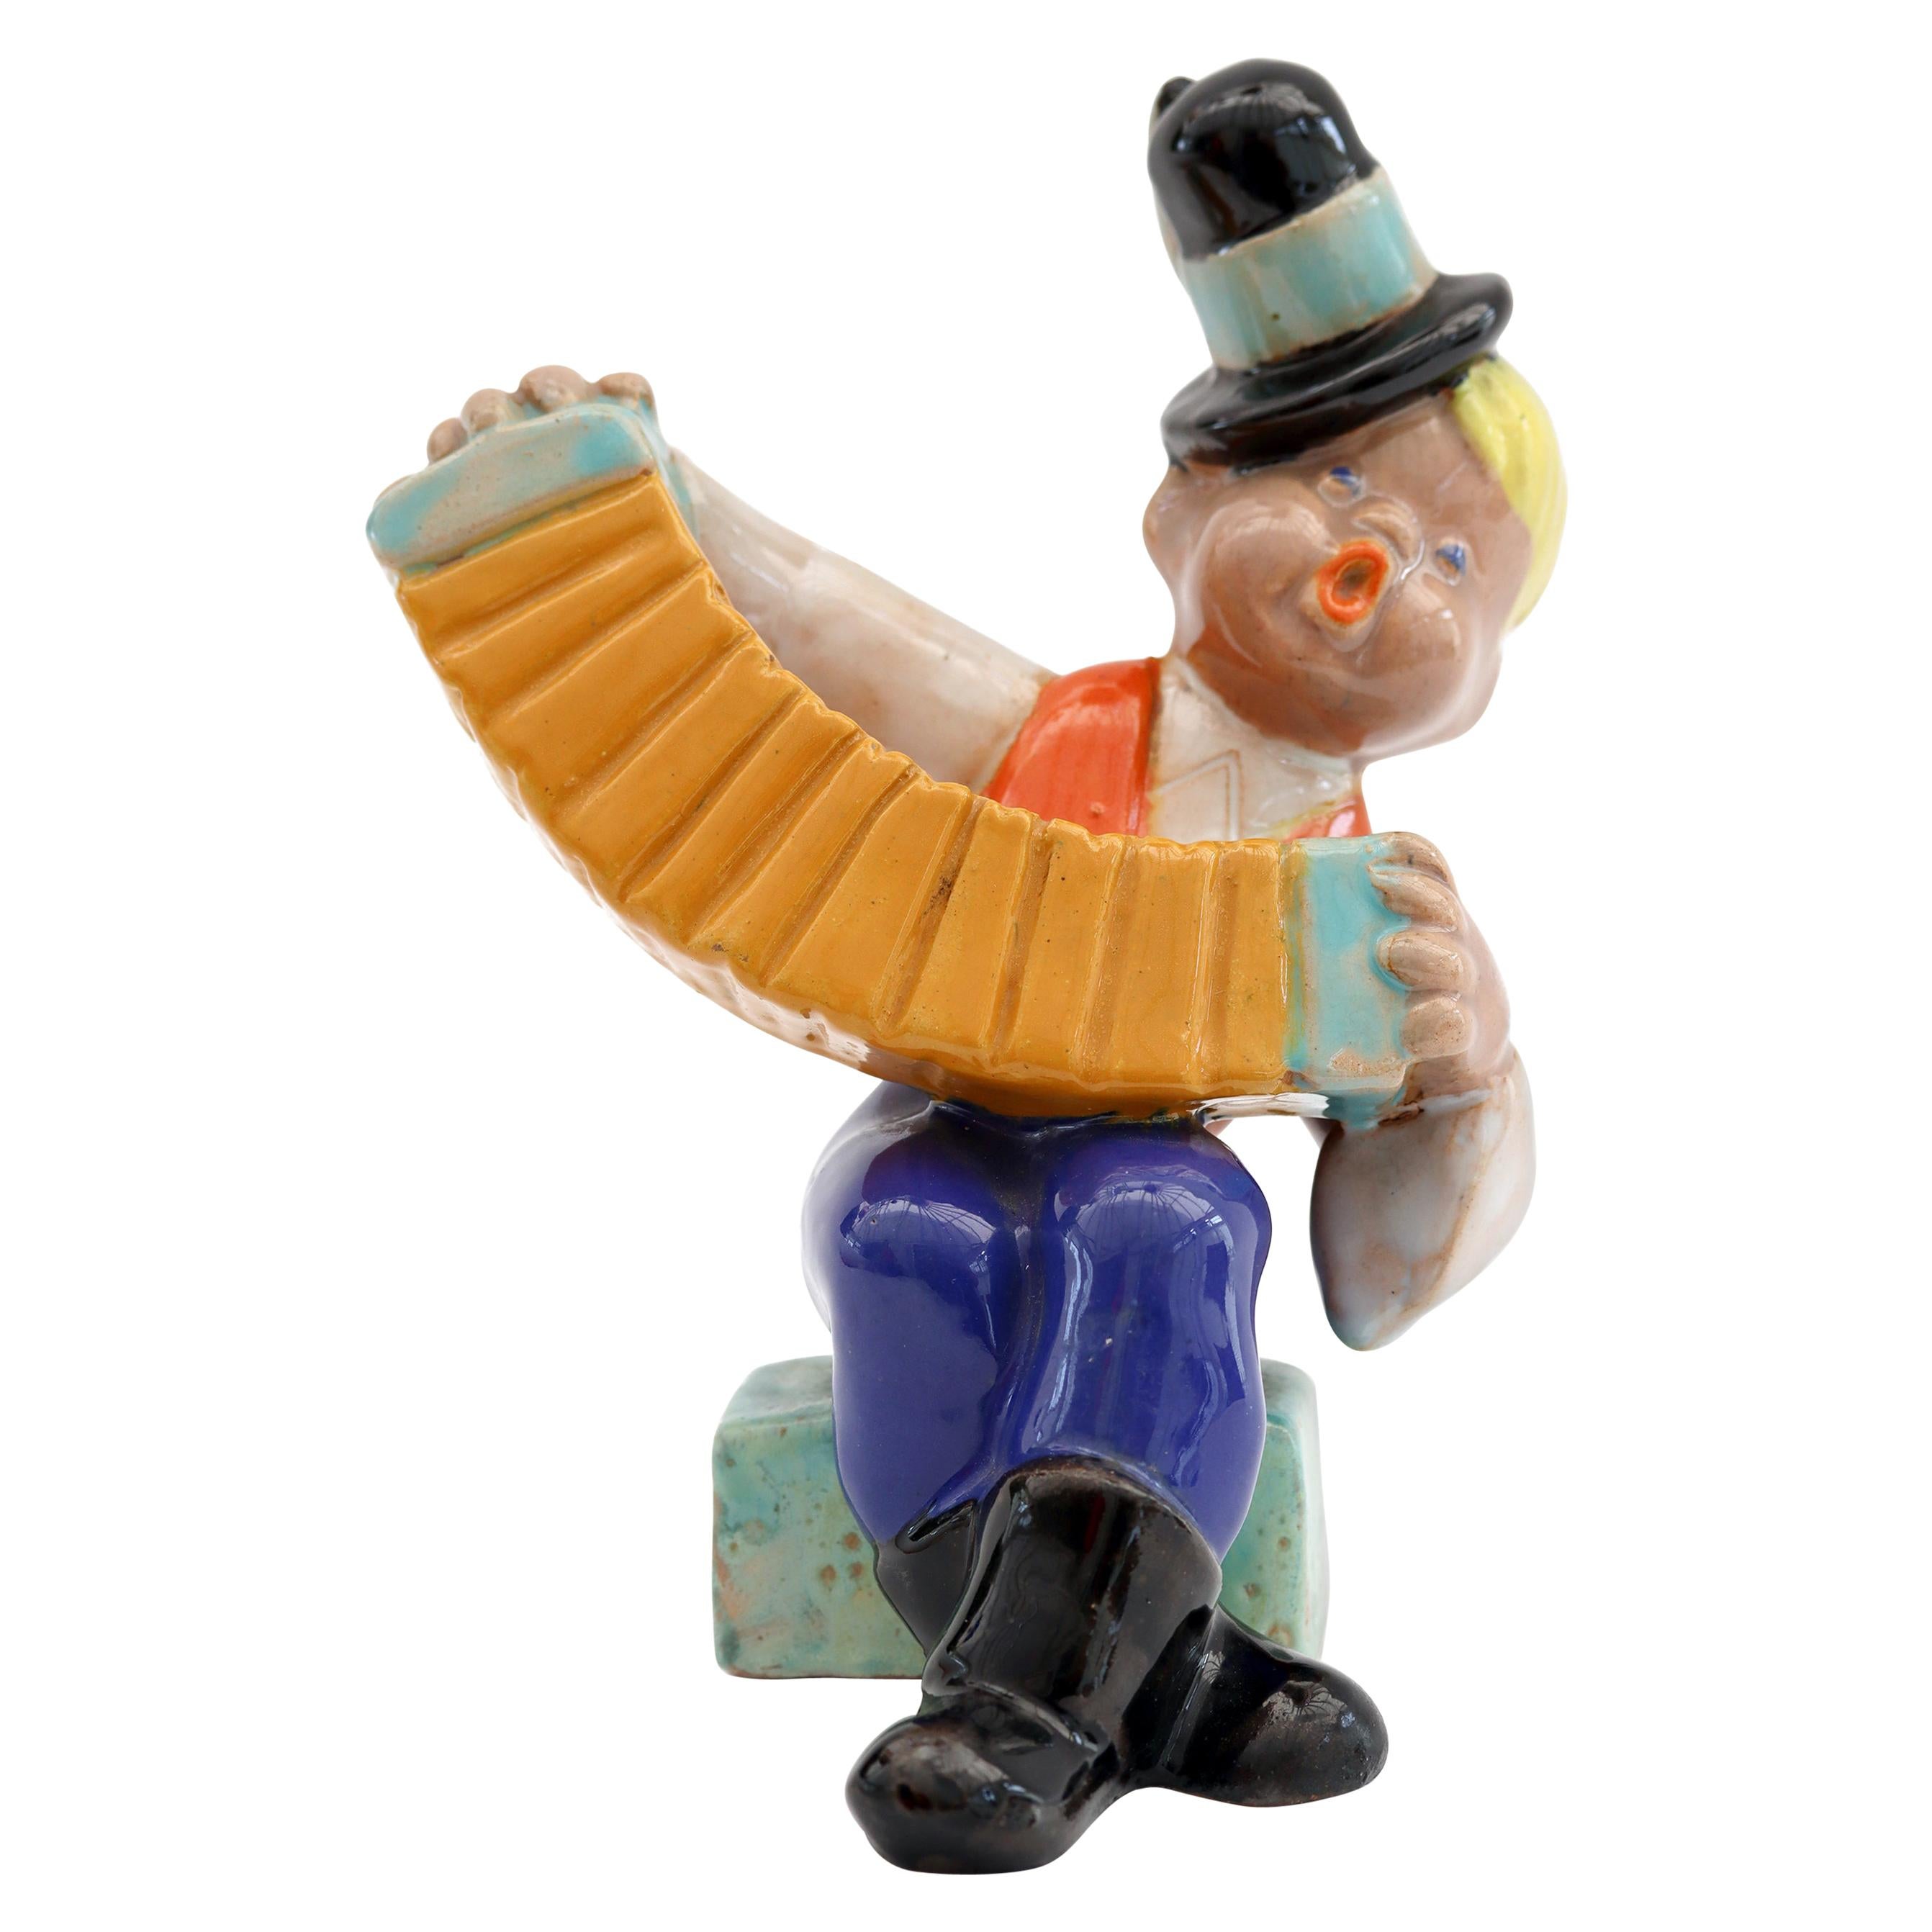 Cortendorf - 3 For Sale at 1stdibs | cortendorf figurines 